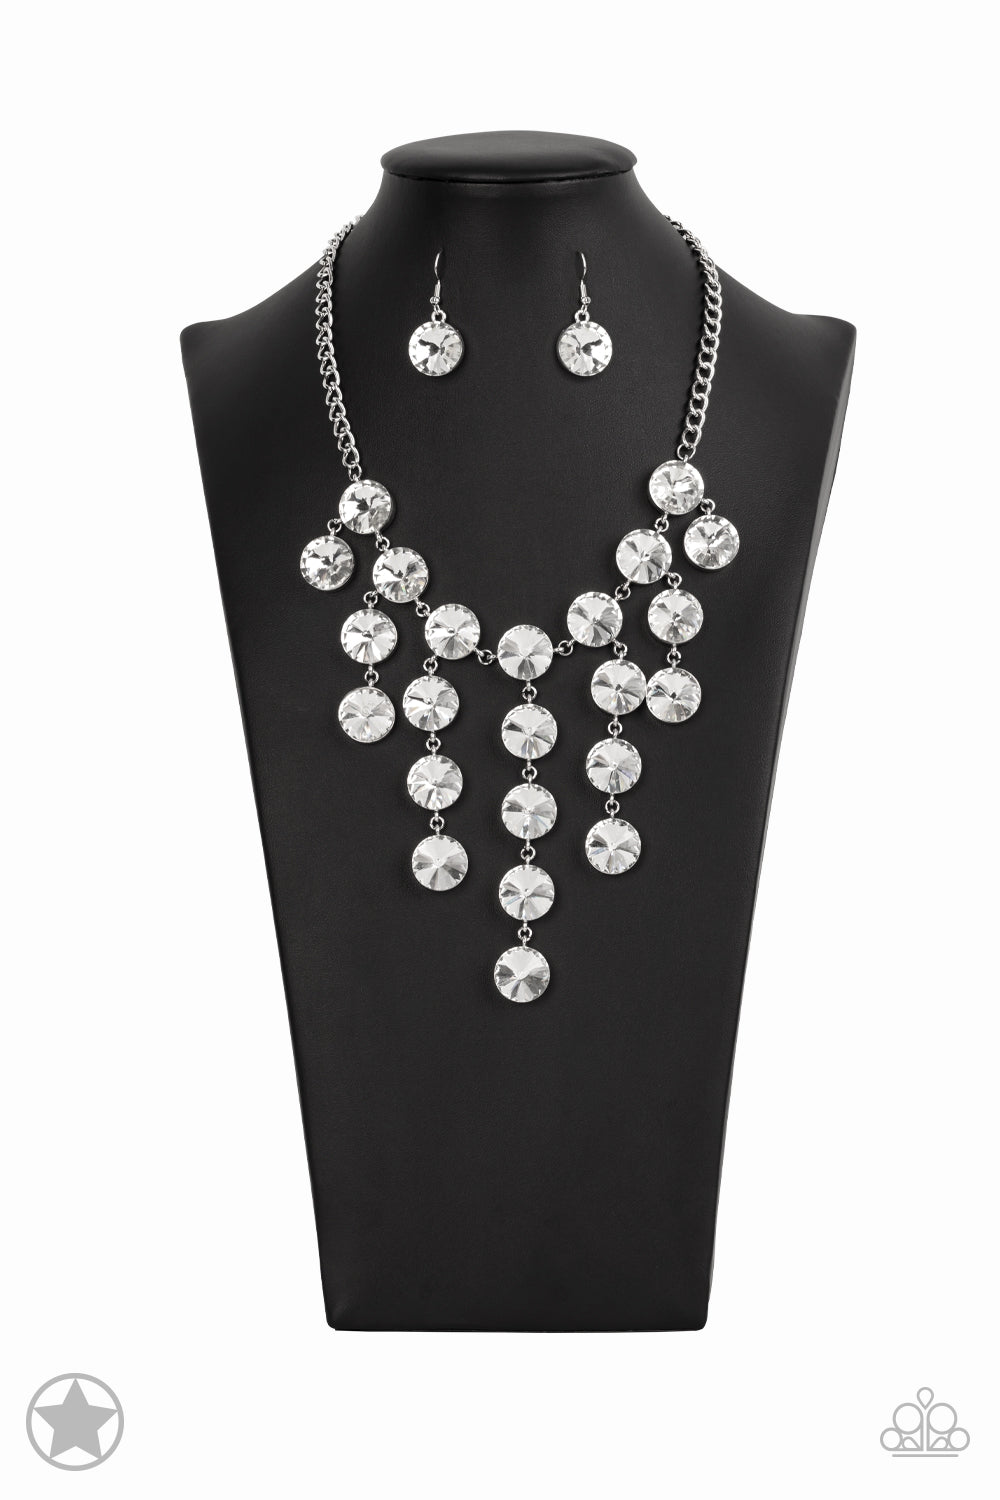 Paparazzi Spotlight Stunner Blockbuster Necklace - A Finishing Touch Jewelry